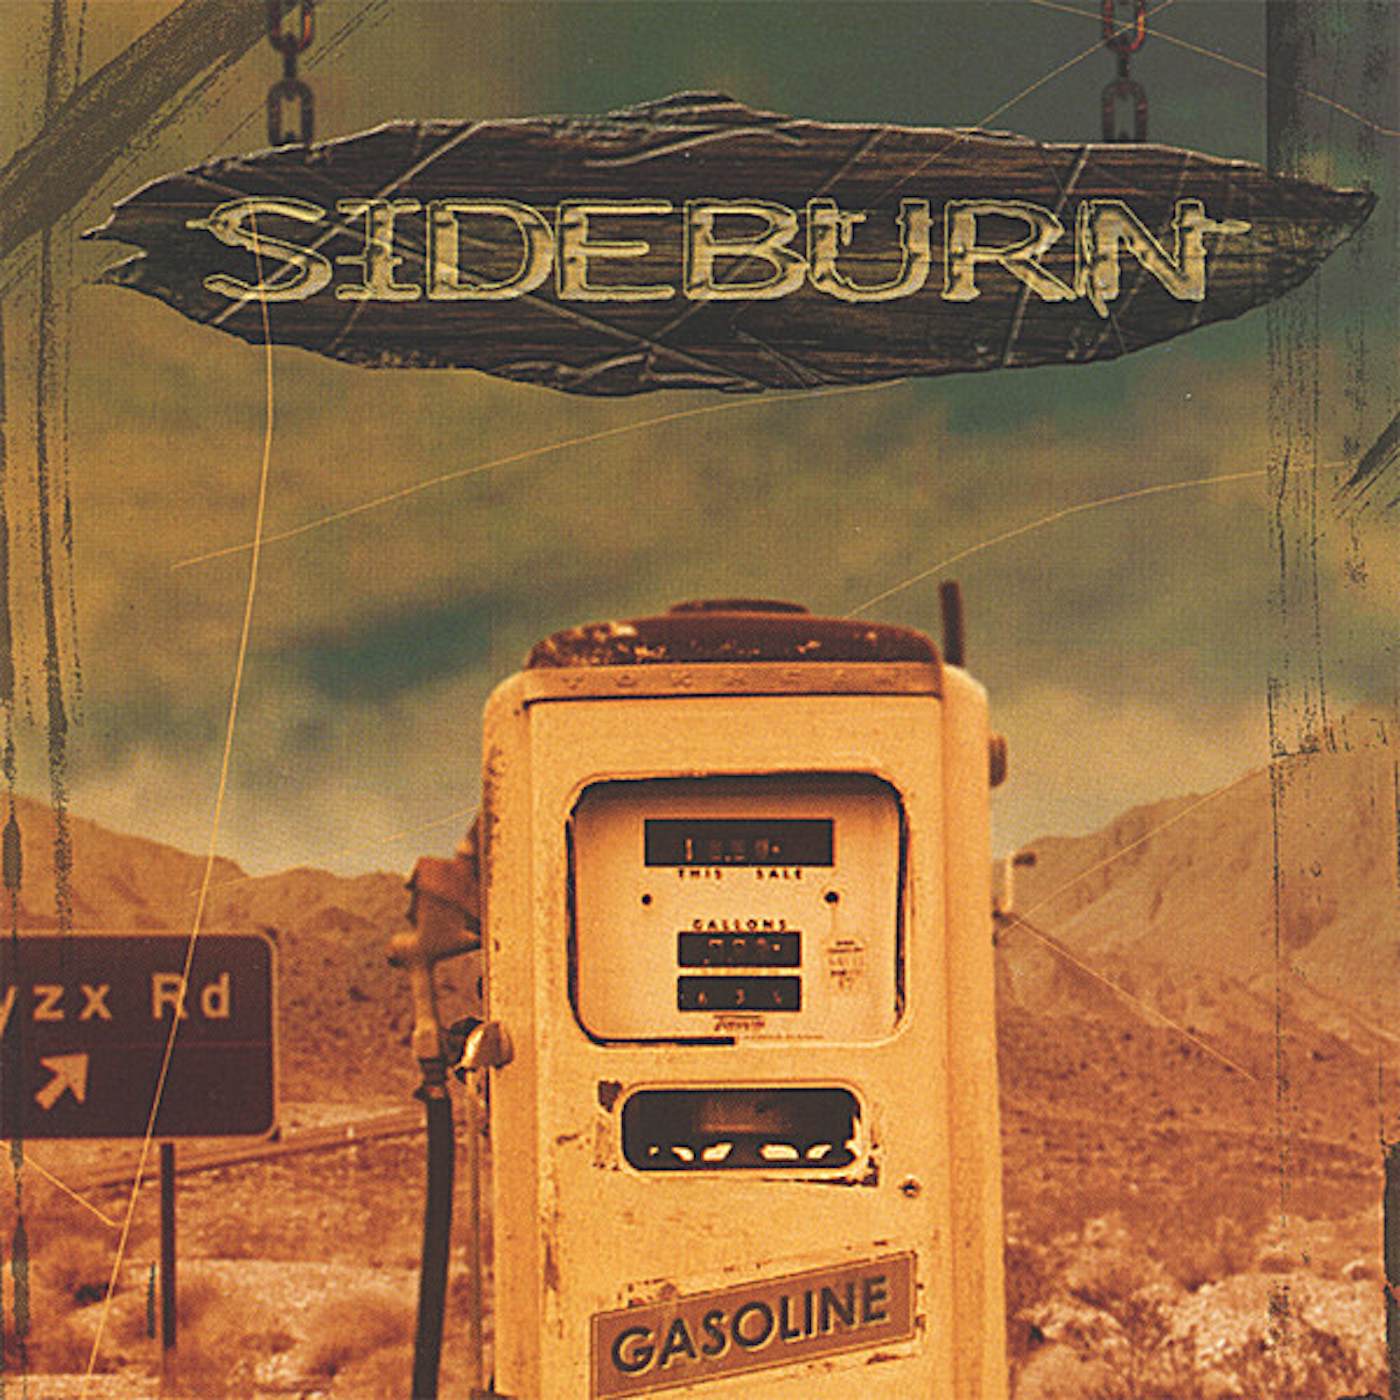 Sideburn GASOLINE CD